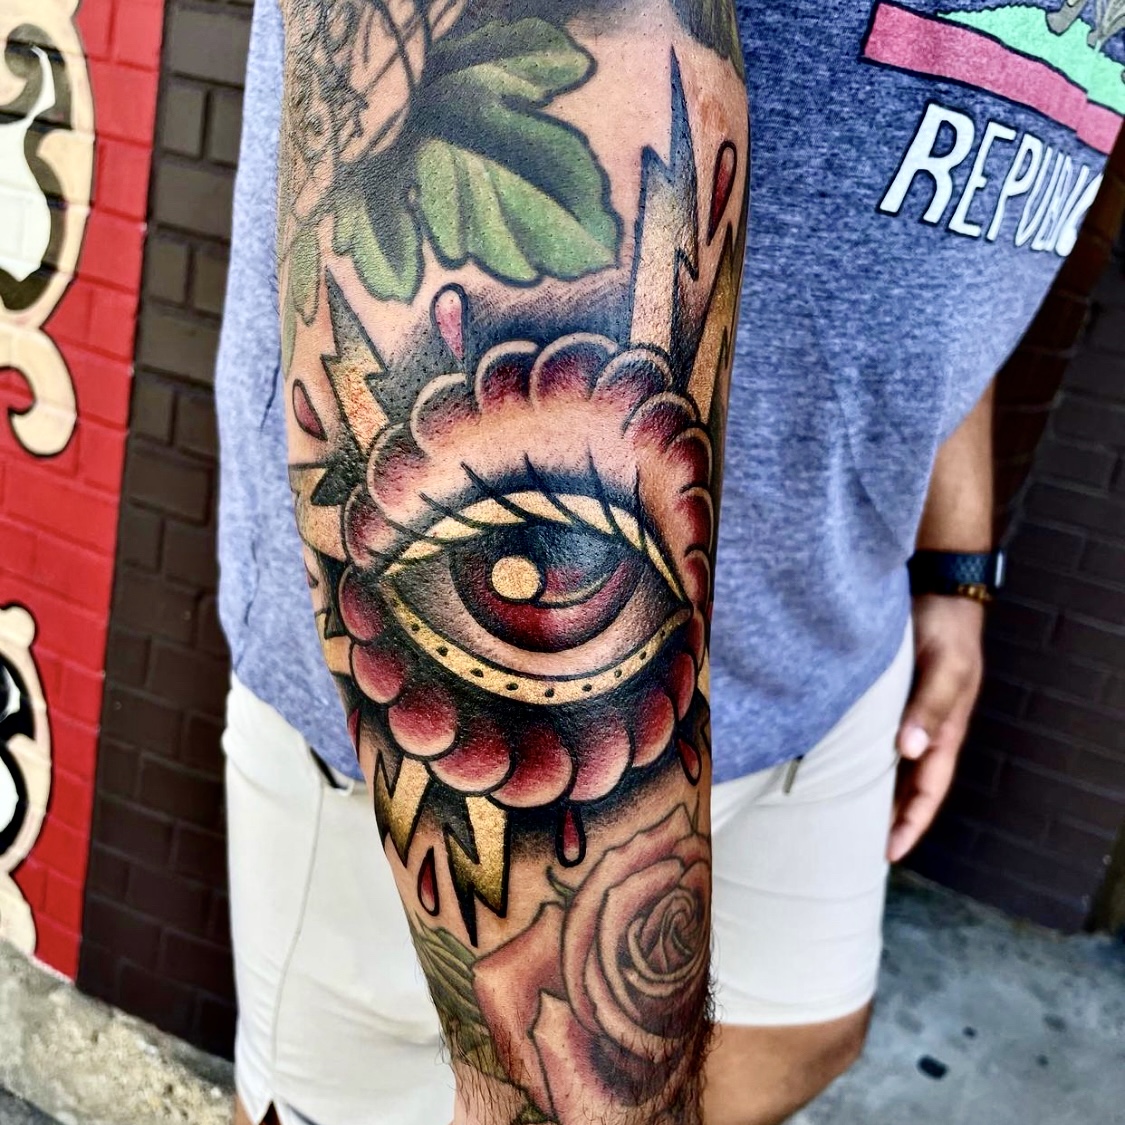 Tattoo of an eye on a man's arm